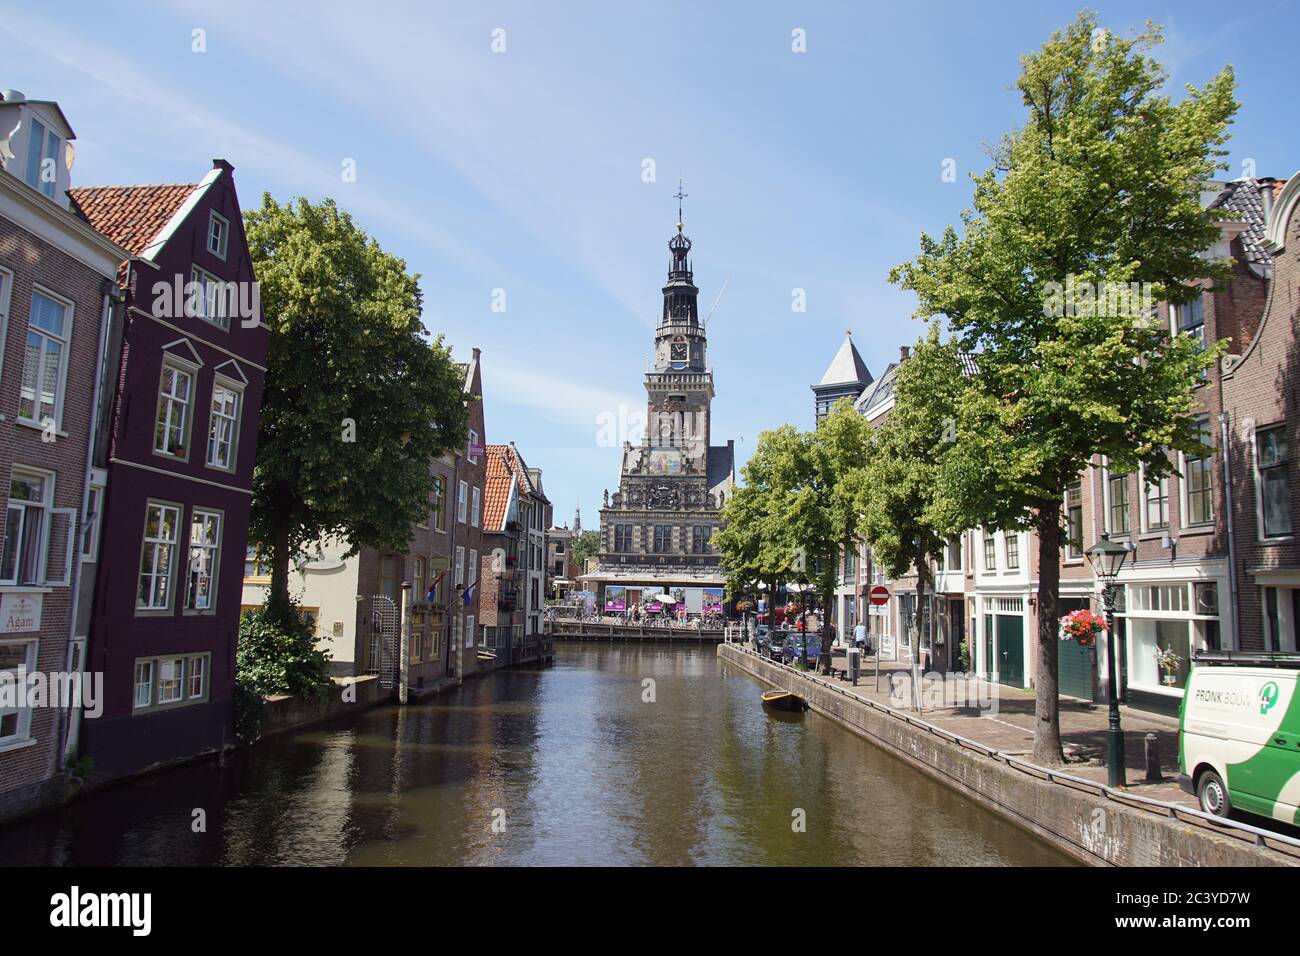 De Waag (casa di pesatura) a piazza Waagplein a Alkmaar, Paesi Bassi. Visto da Luttik Oudorp canal. Foto Stock